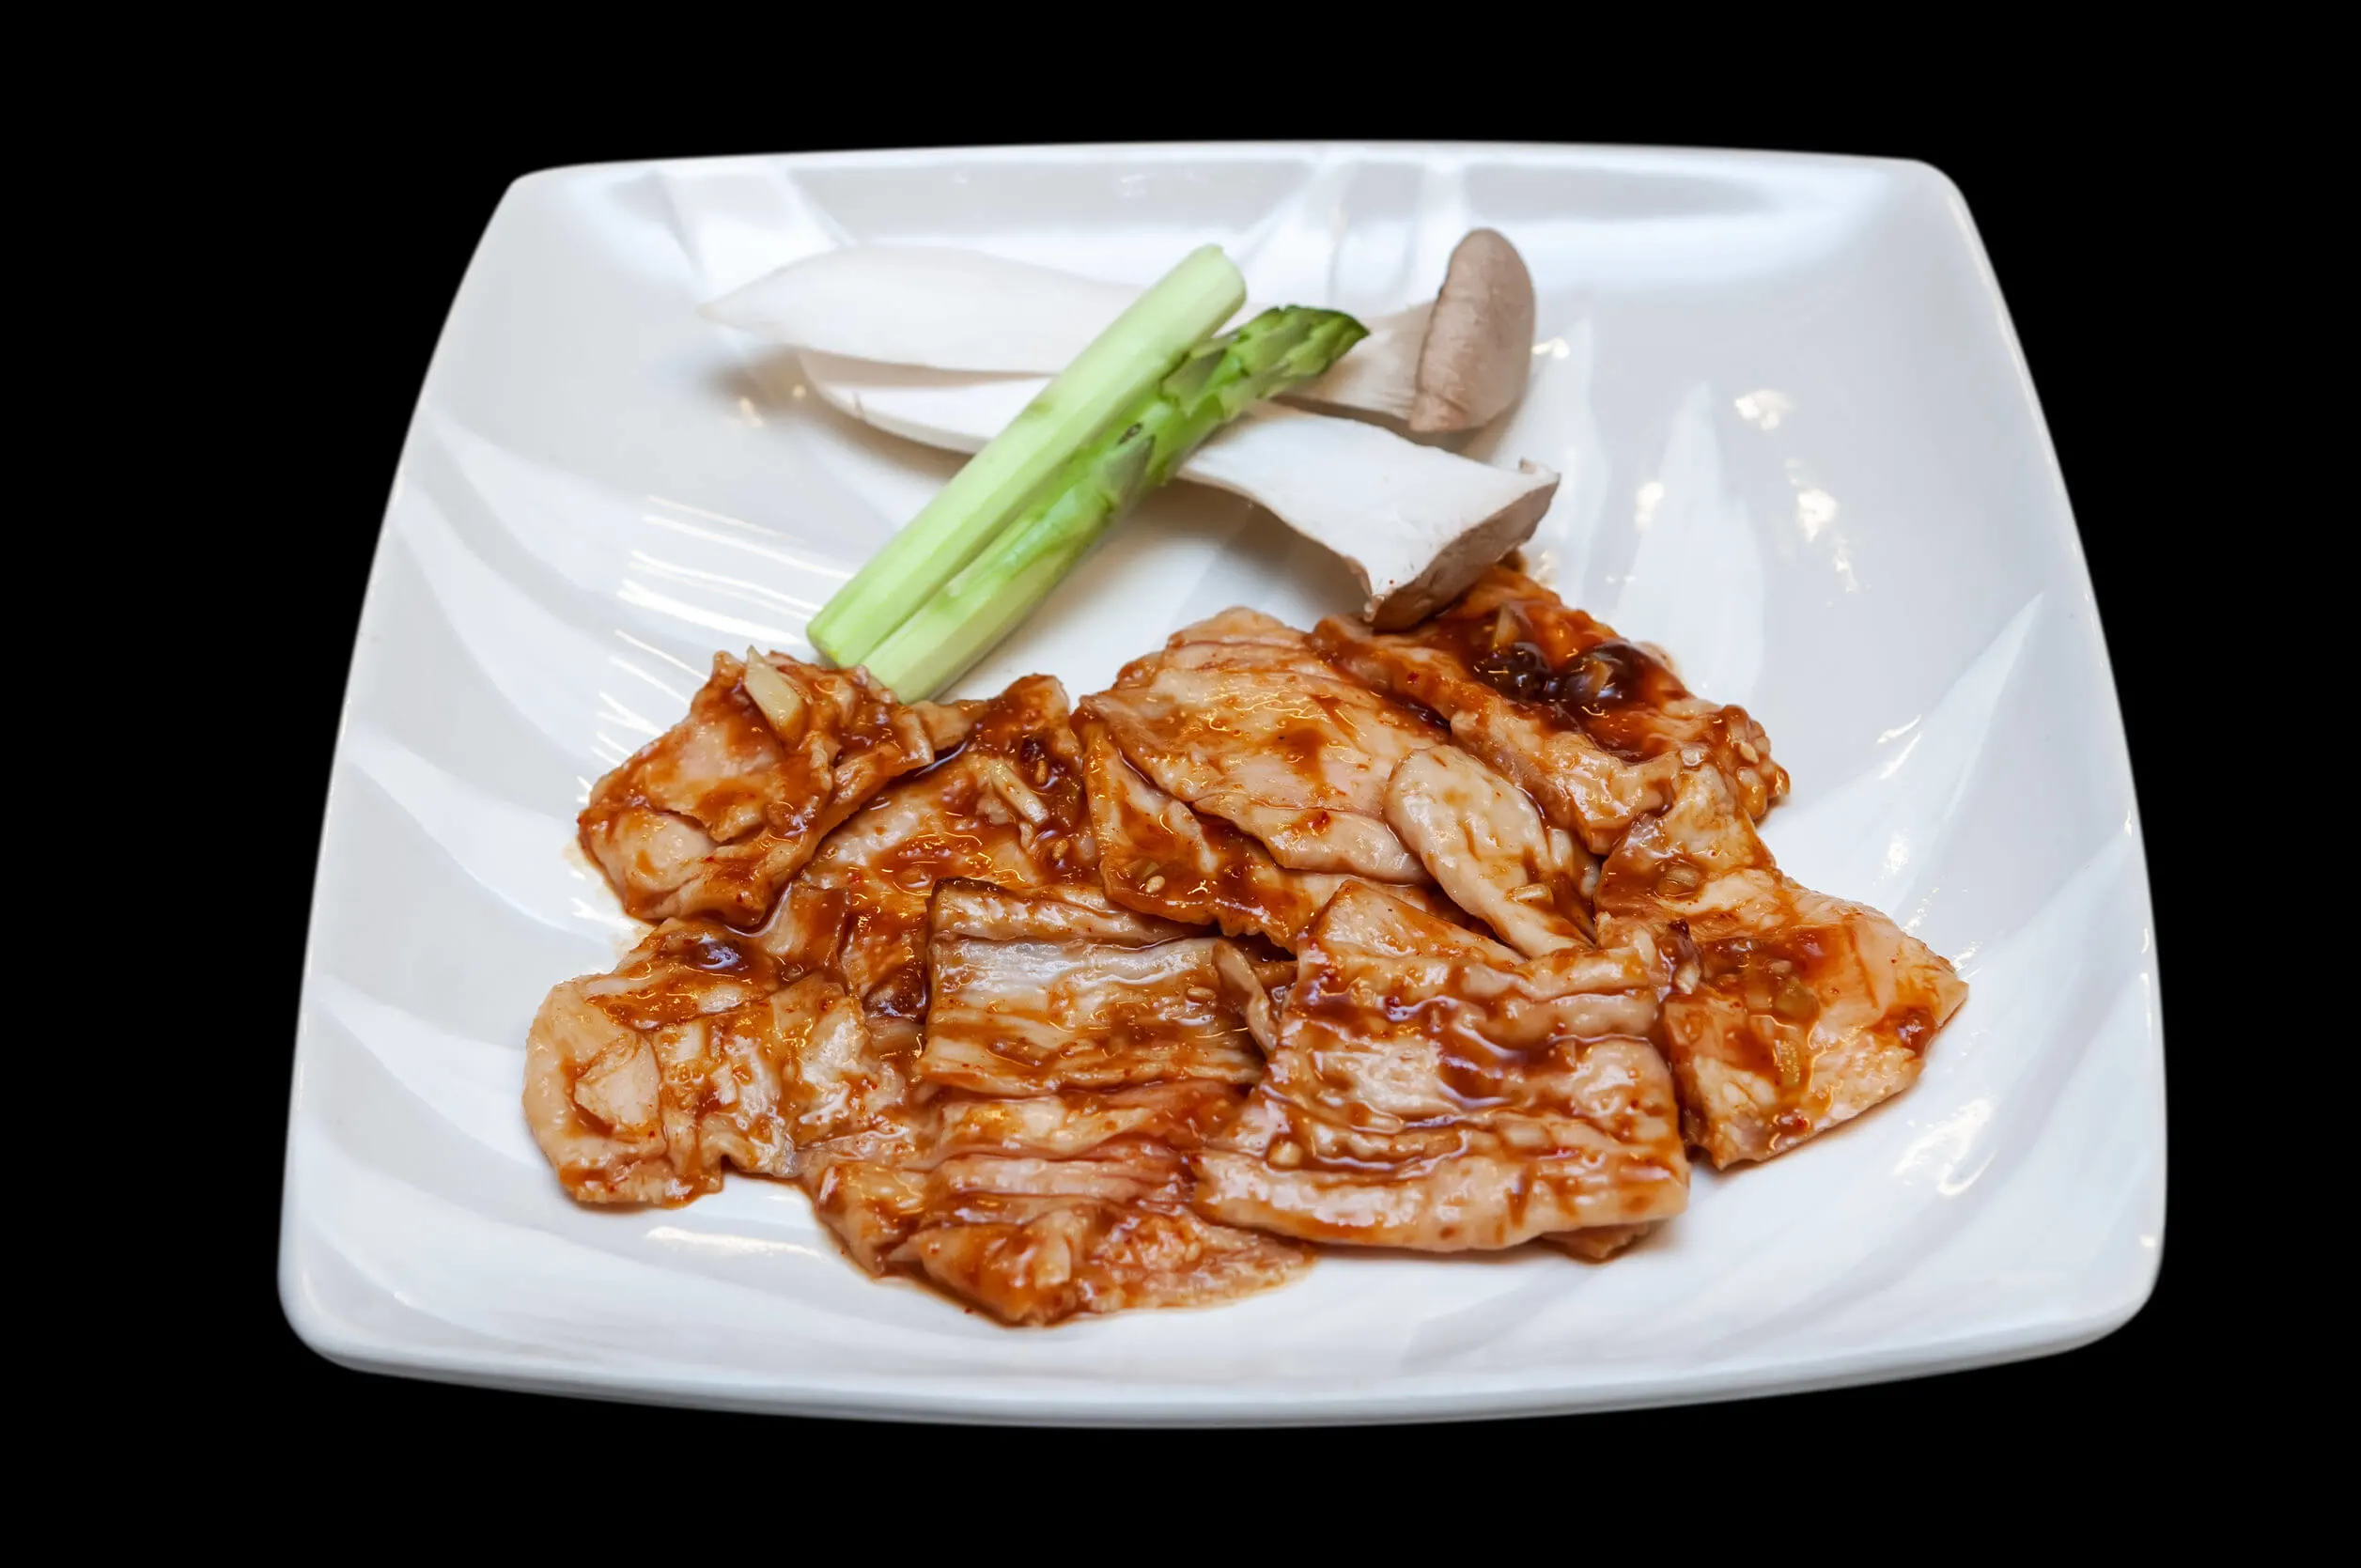 Japanese beef intestine yakiniku menu in white plate dicut from black background.